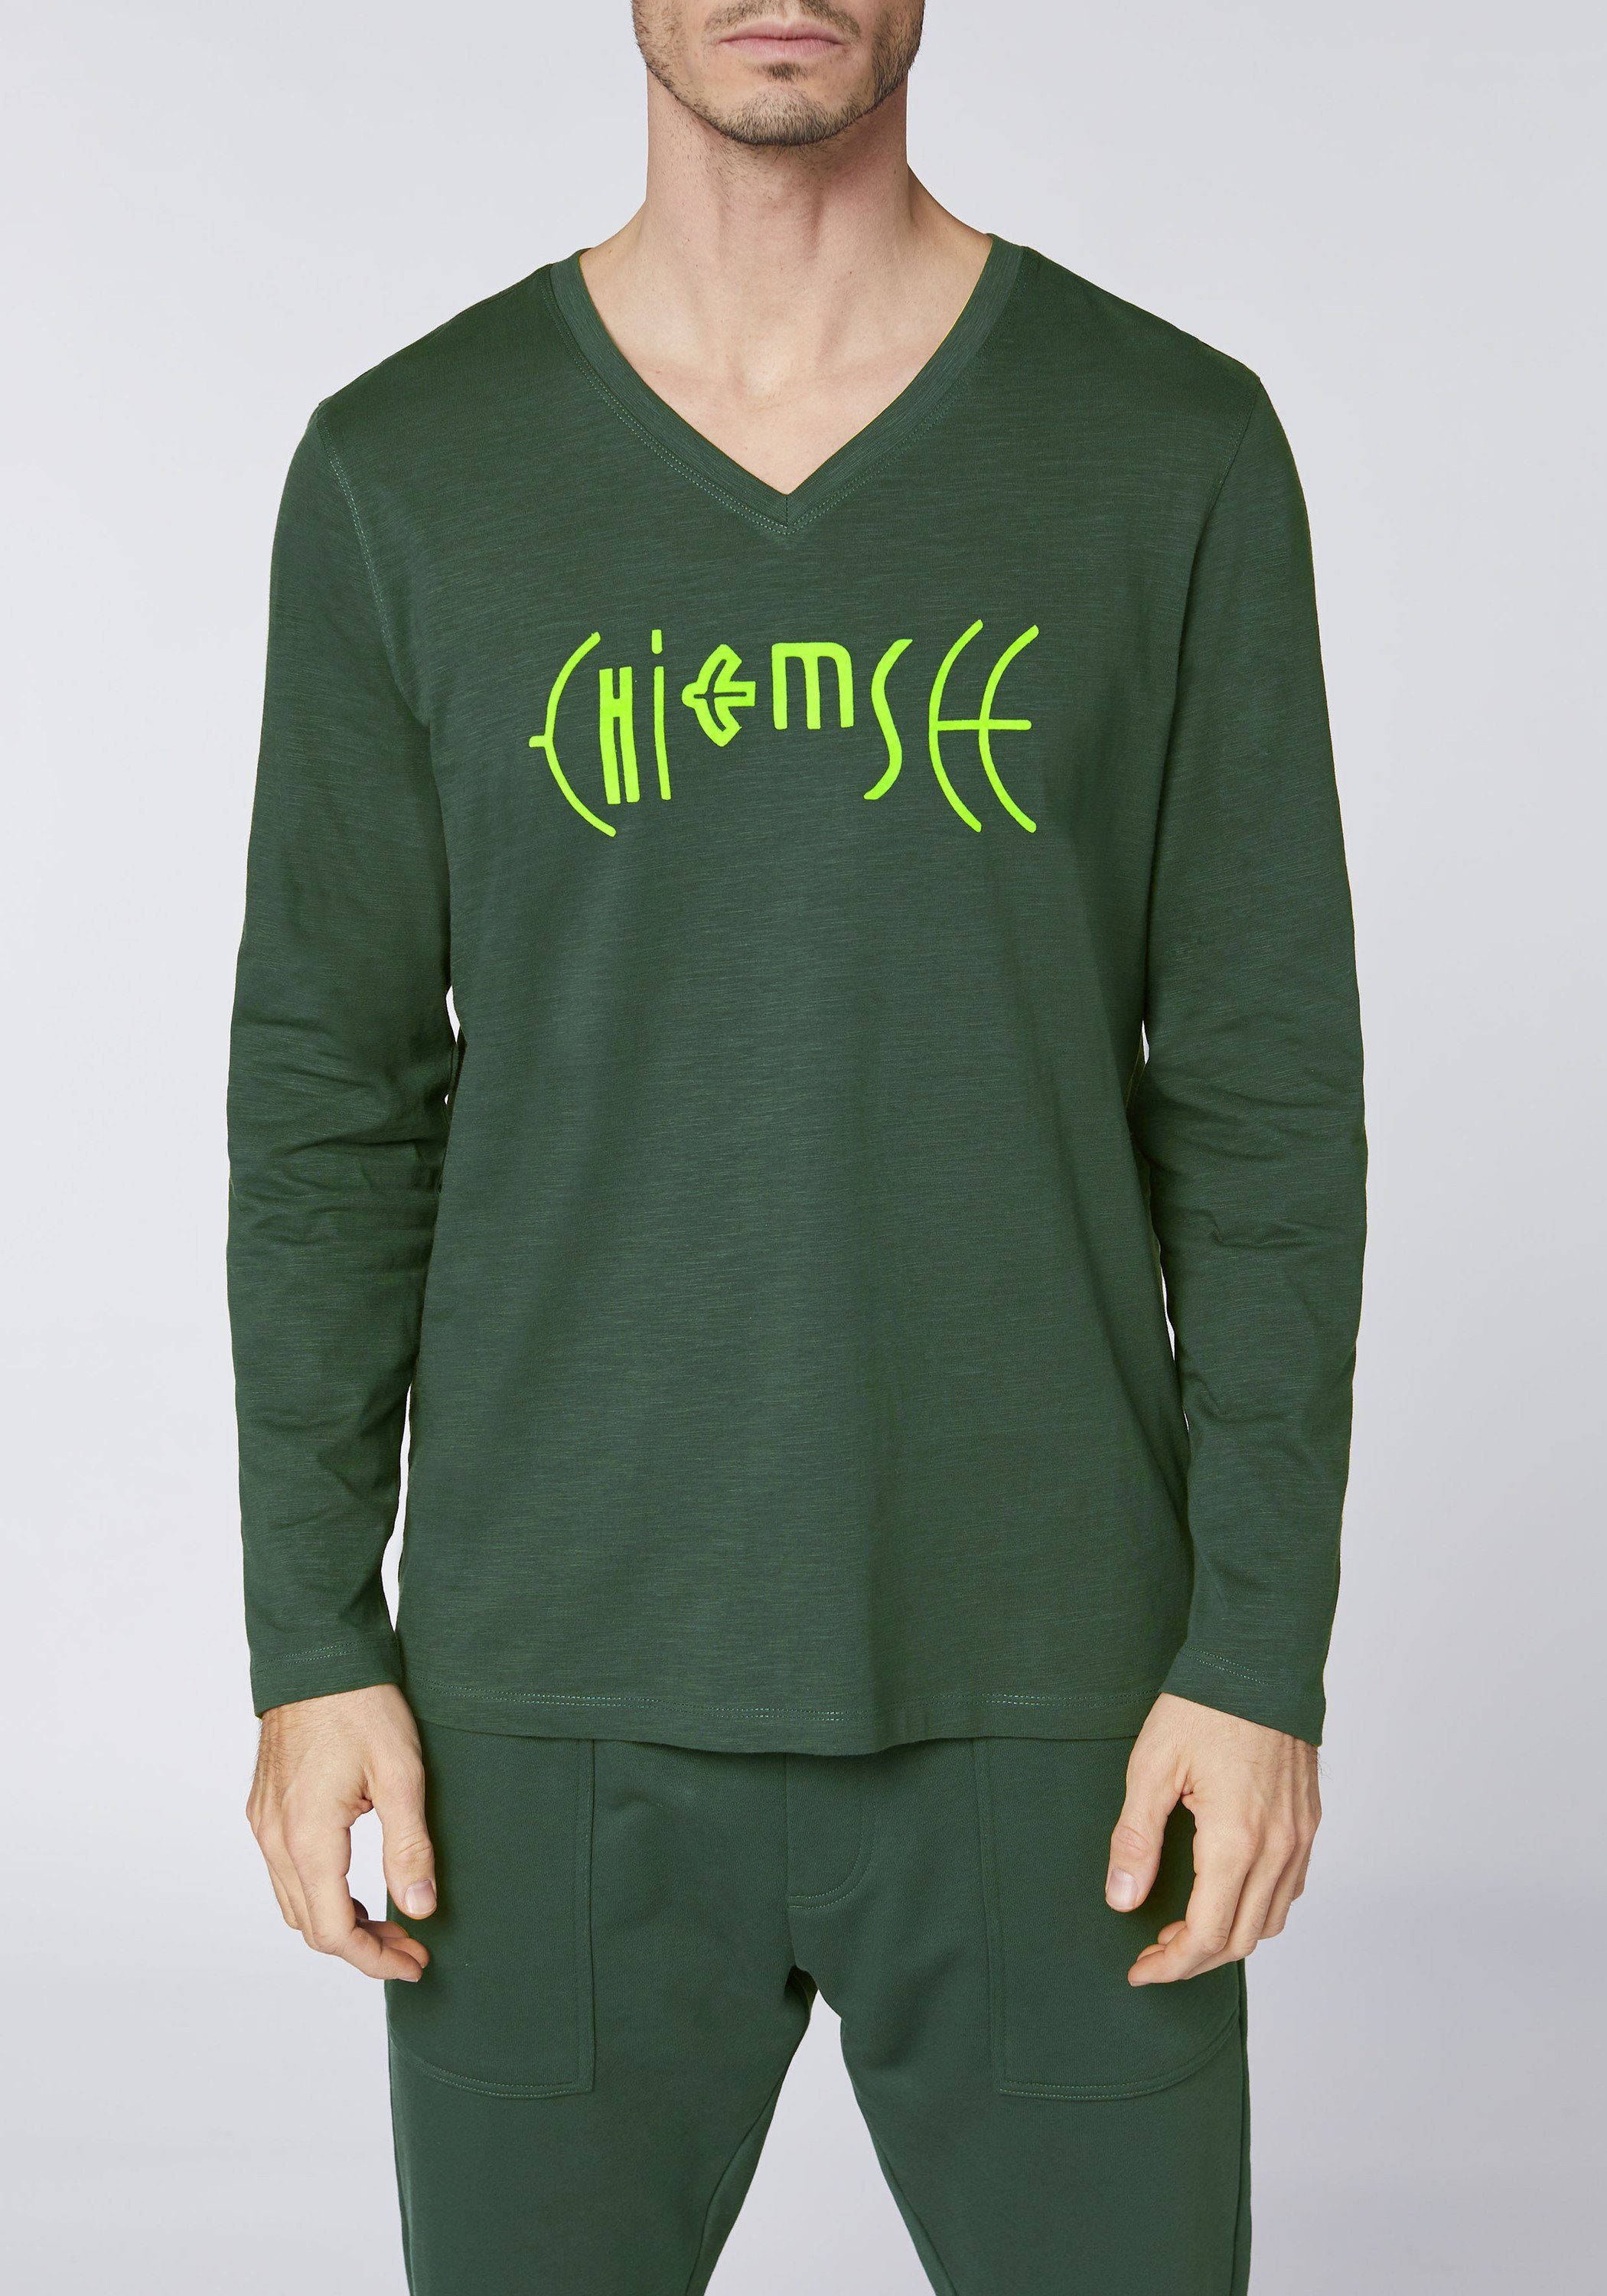 aus grün Longsleeve mit Chiemsee V-Neck Logo-Longsleeve Jersey dunkel 1